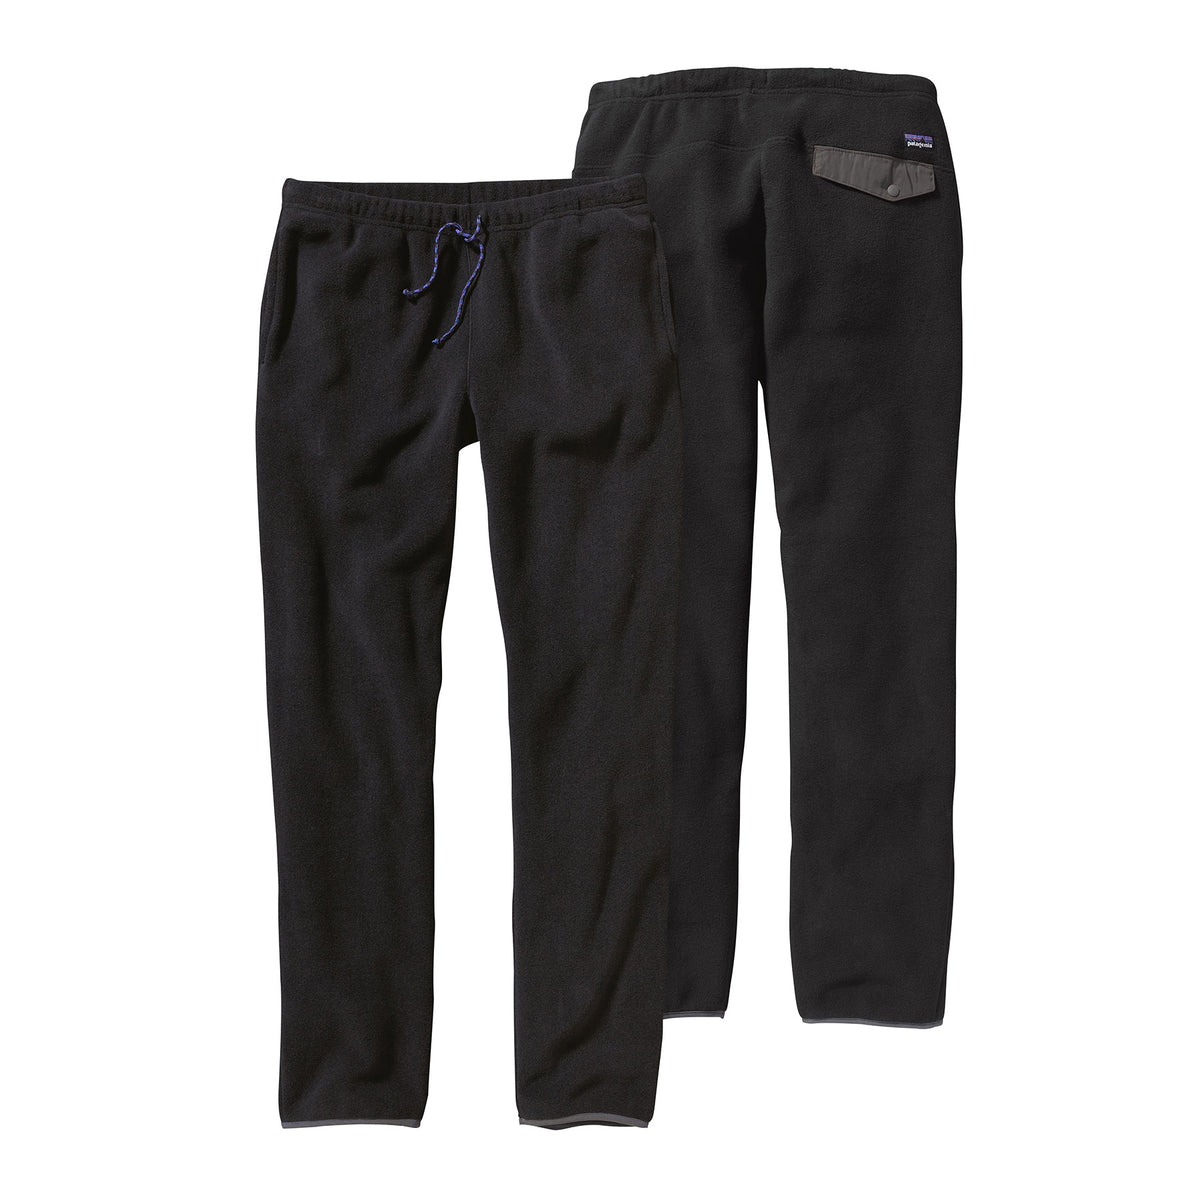 NWT Patagonia Men's Synchilla Snap-T Pants Sweatpants Nickel Gray Classic  Navy